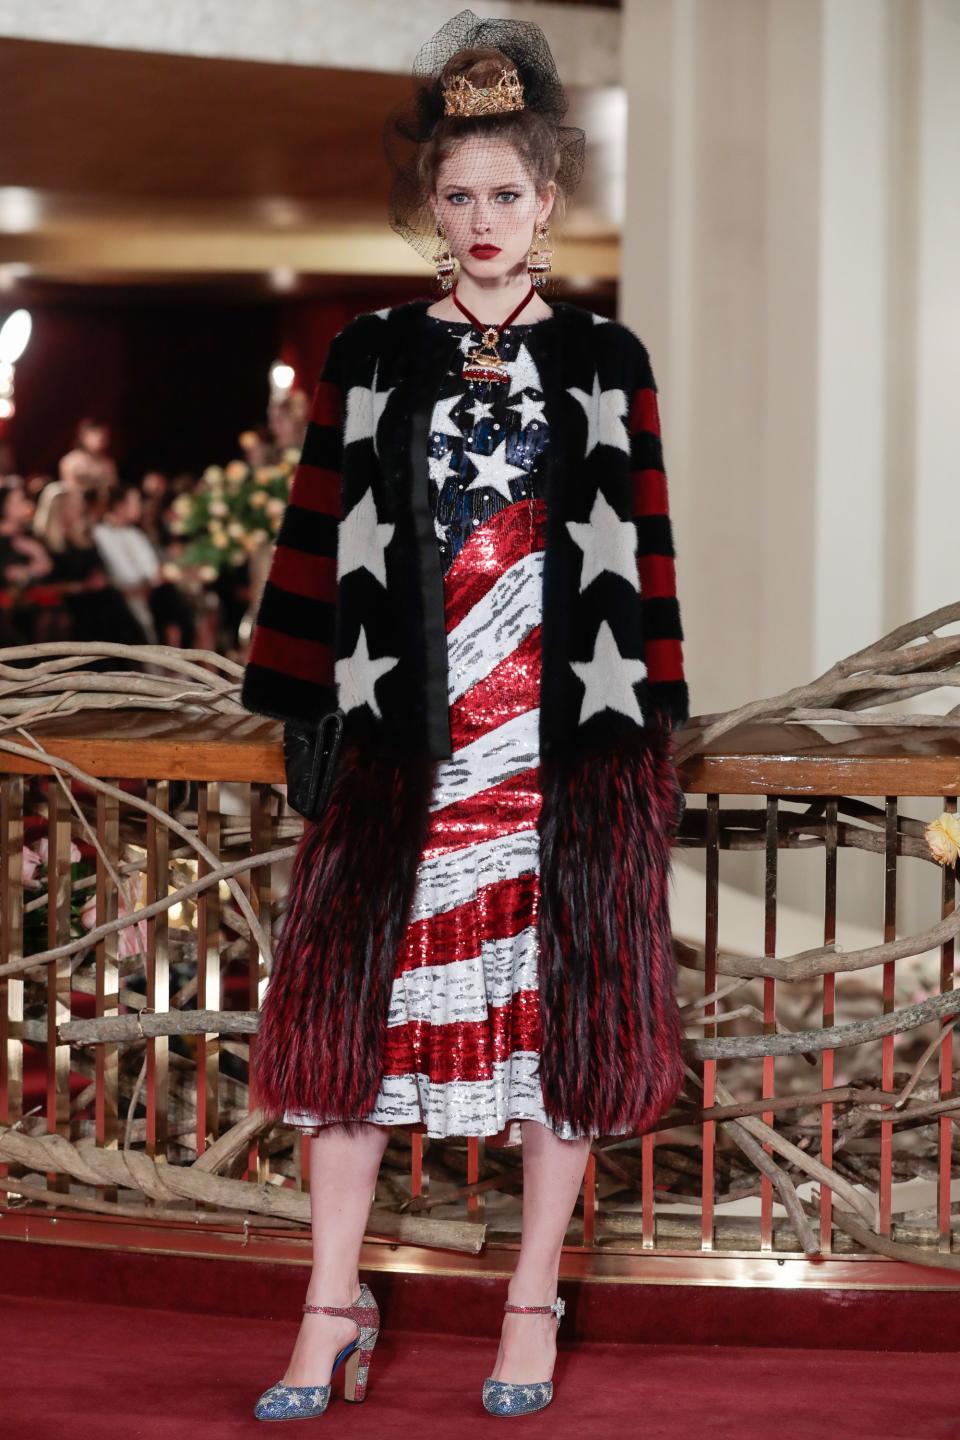 Dolce & Gabbana presents part three of the Alta Moda weekend at New York’s Metropolitan Opera House.